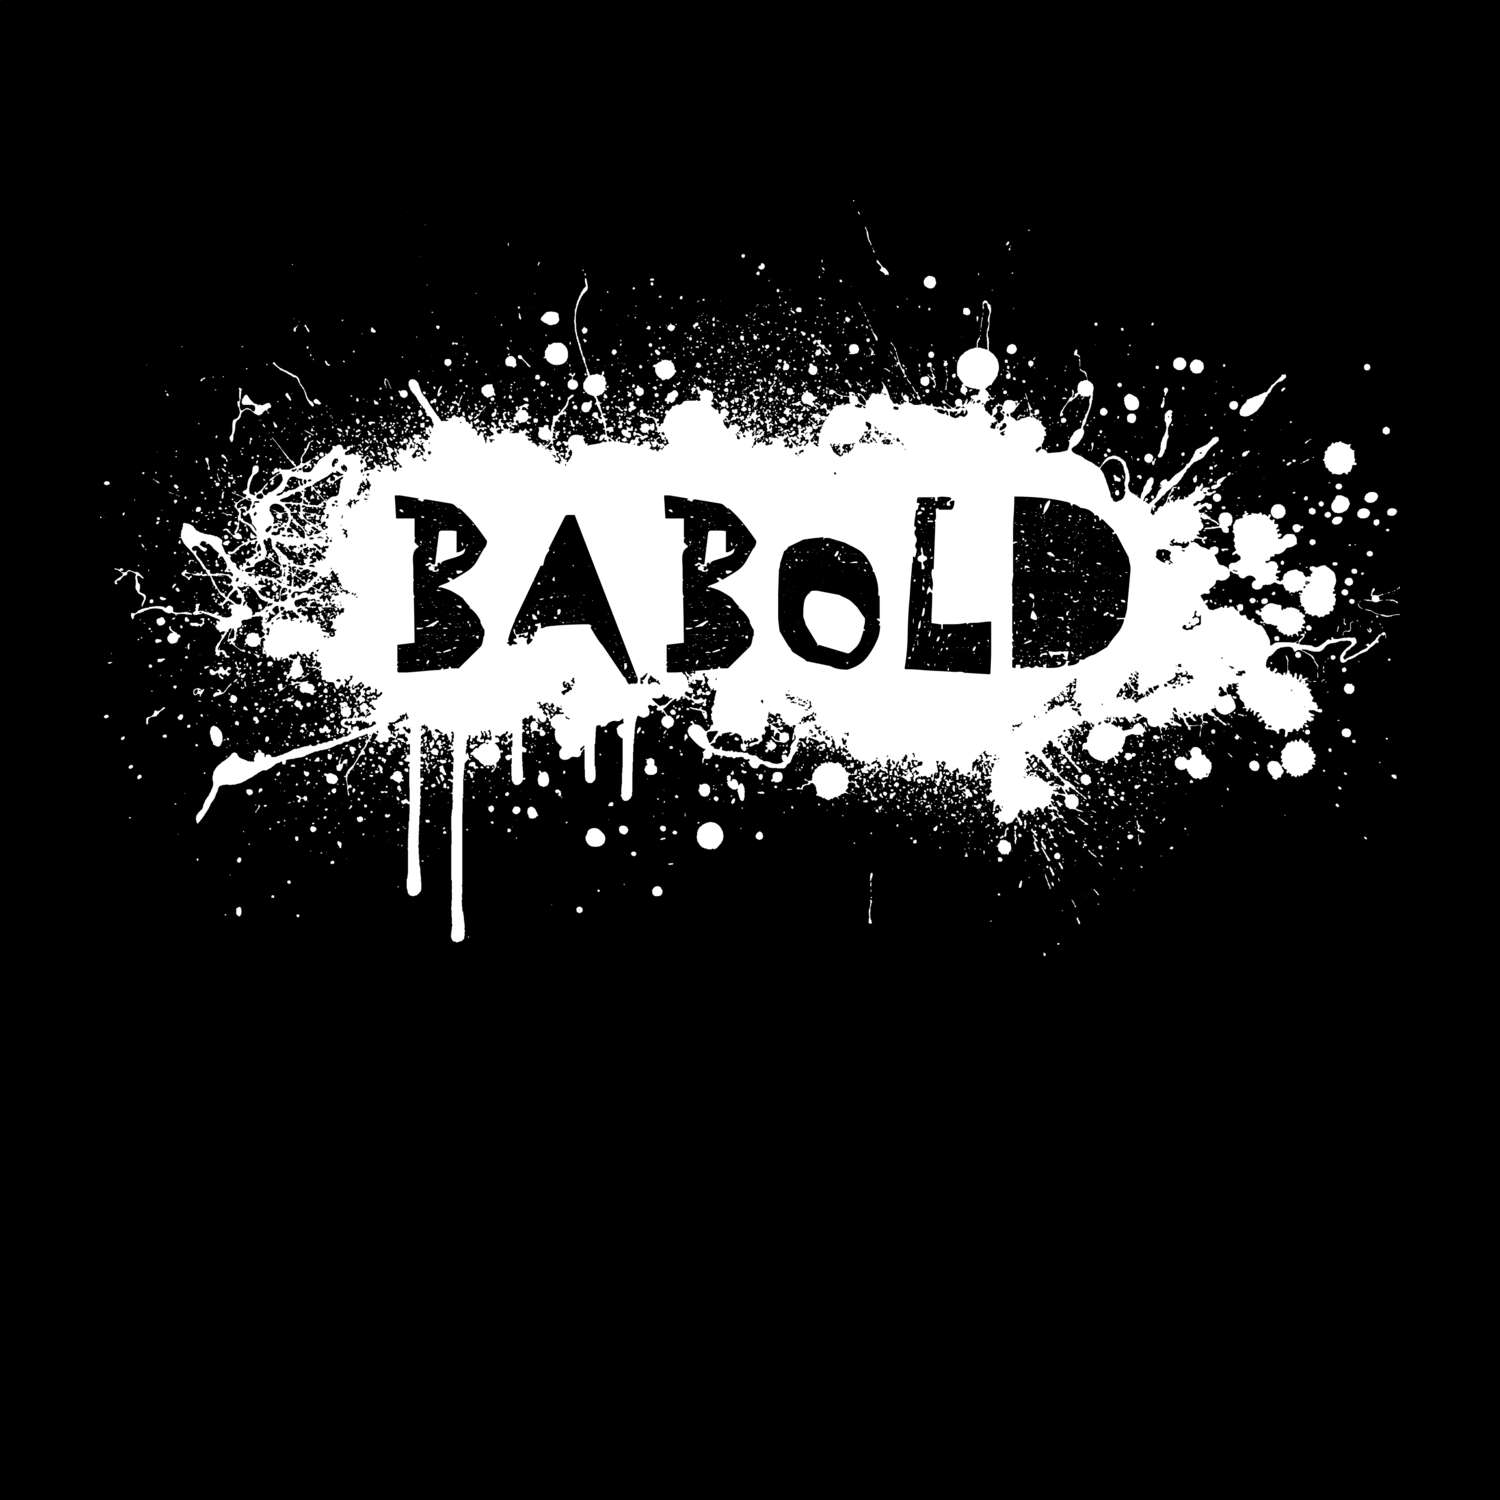 Babold T-Shirt »Paint Splash Punk«